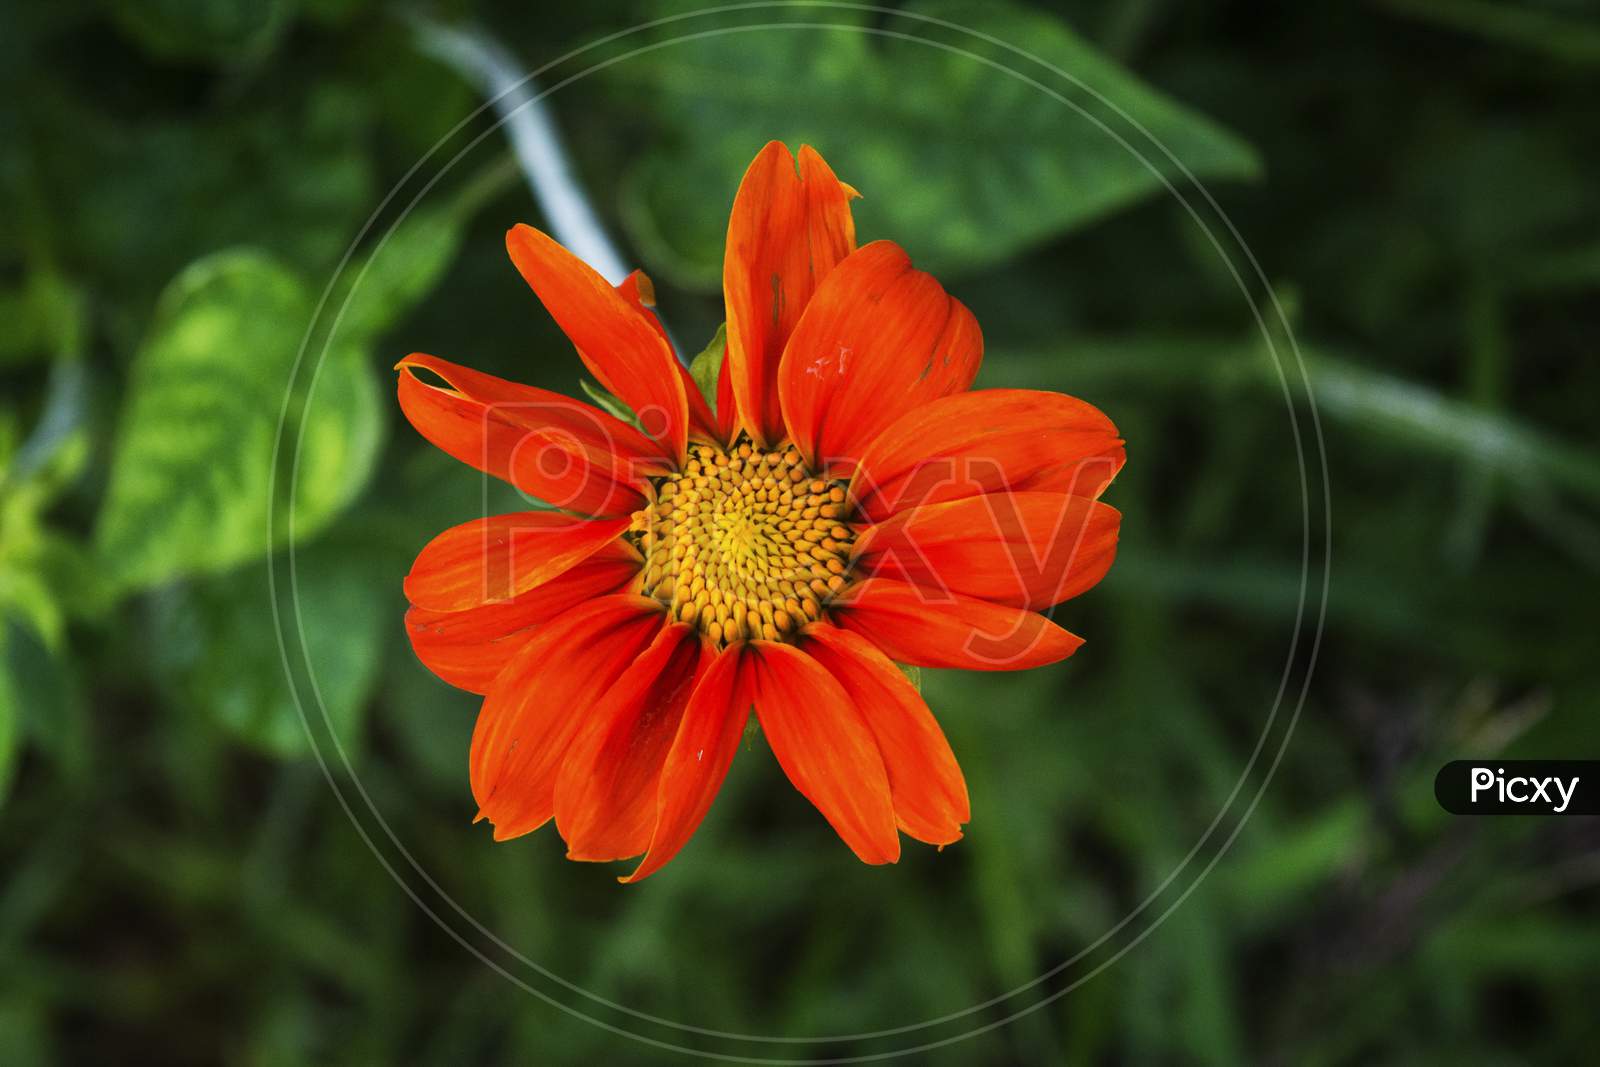 Single Transvaal daisy flower on green background